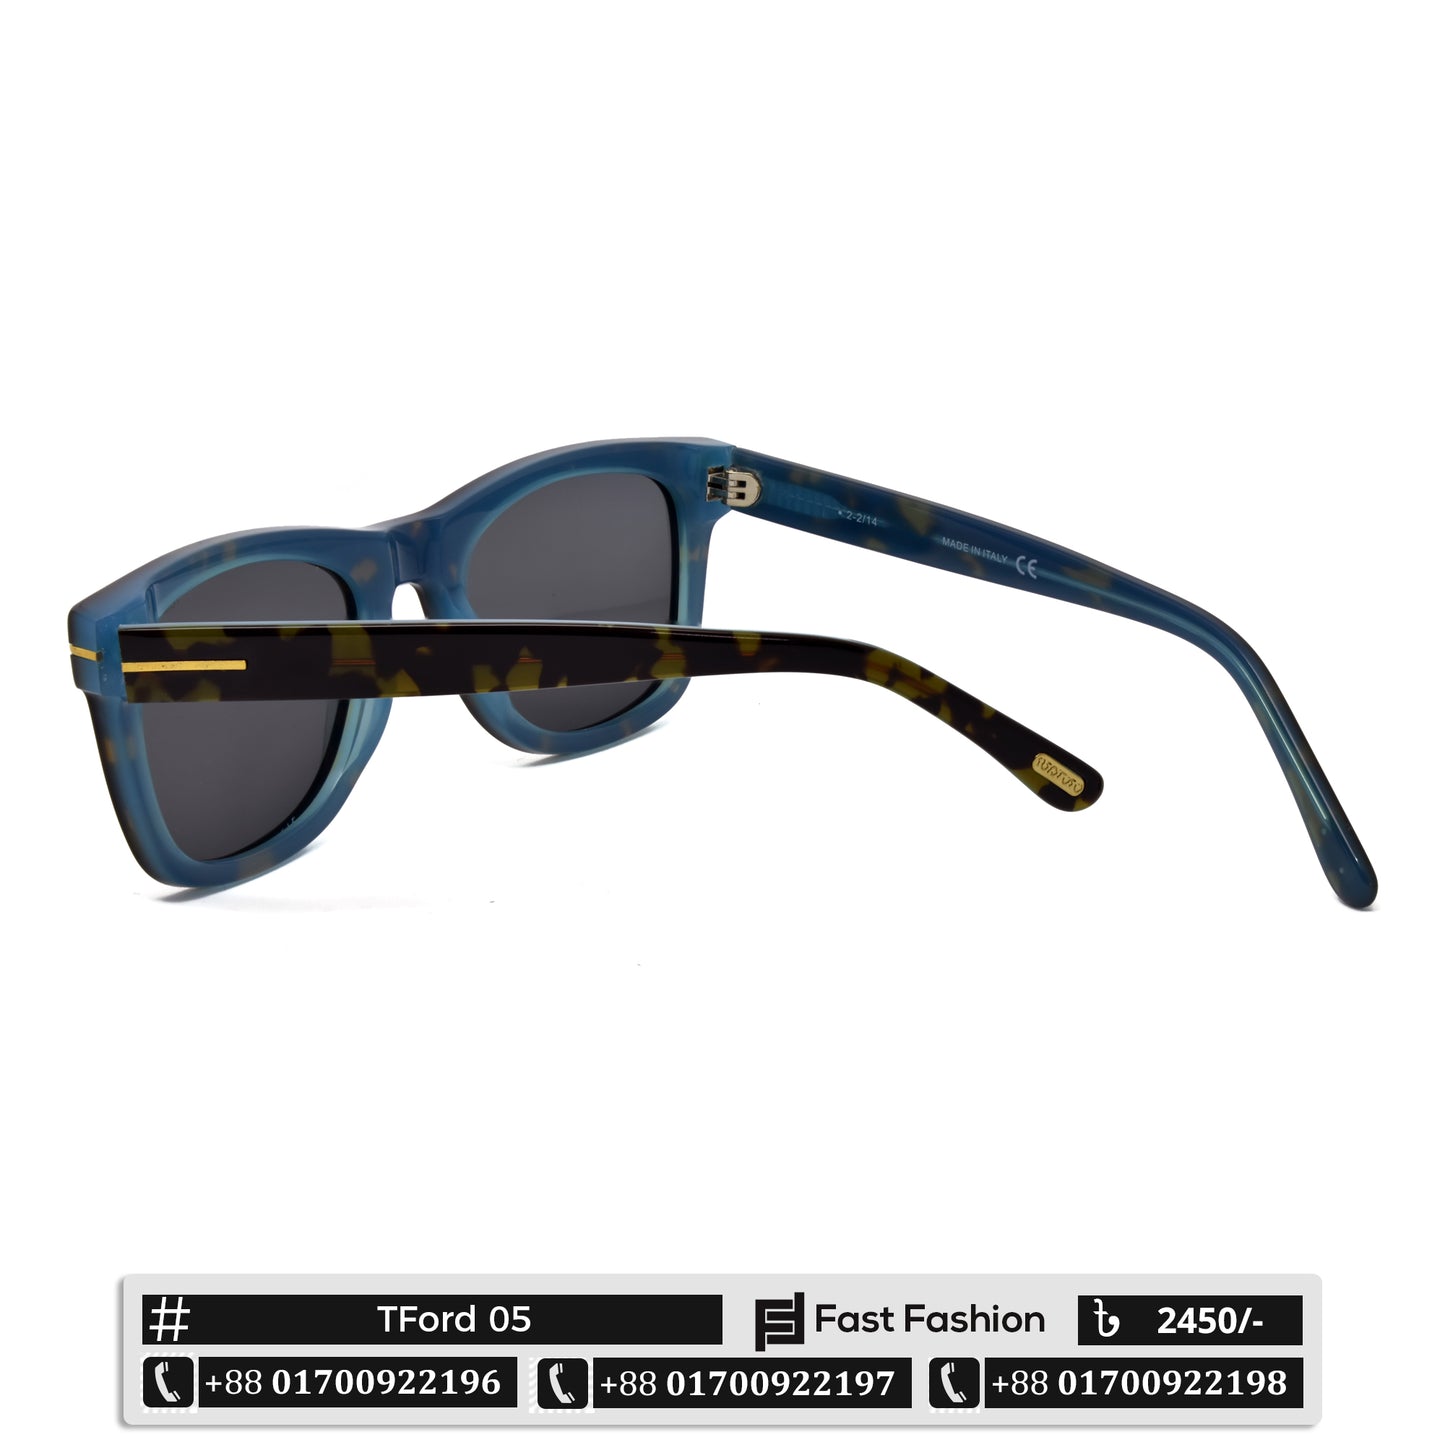 Premium Quality Stylish Wayfarer Shape Sunglass Exclusive | TFord 05